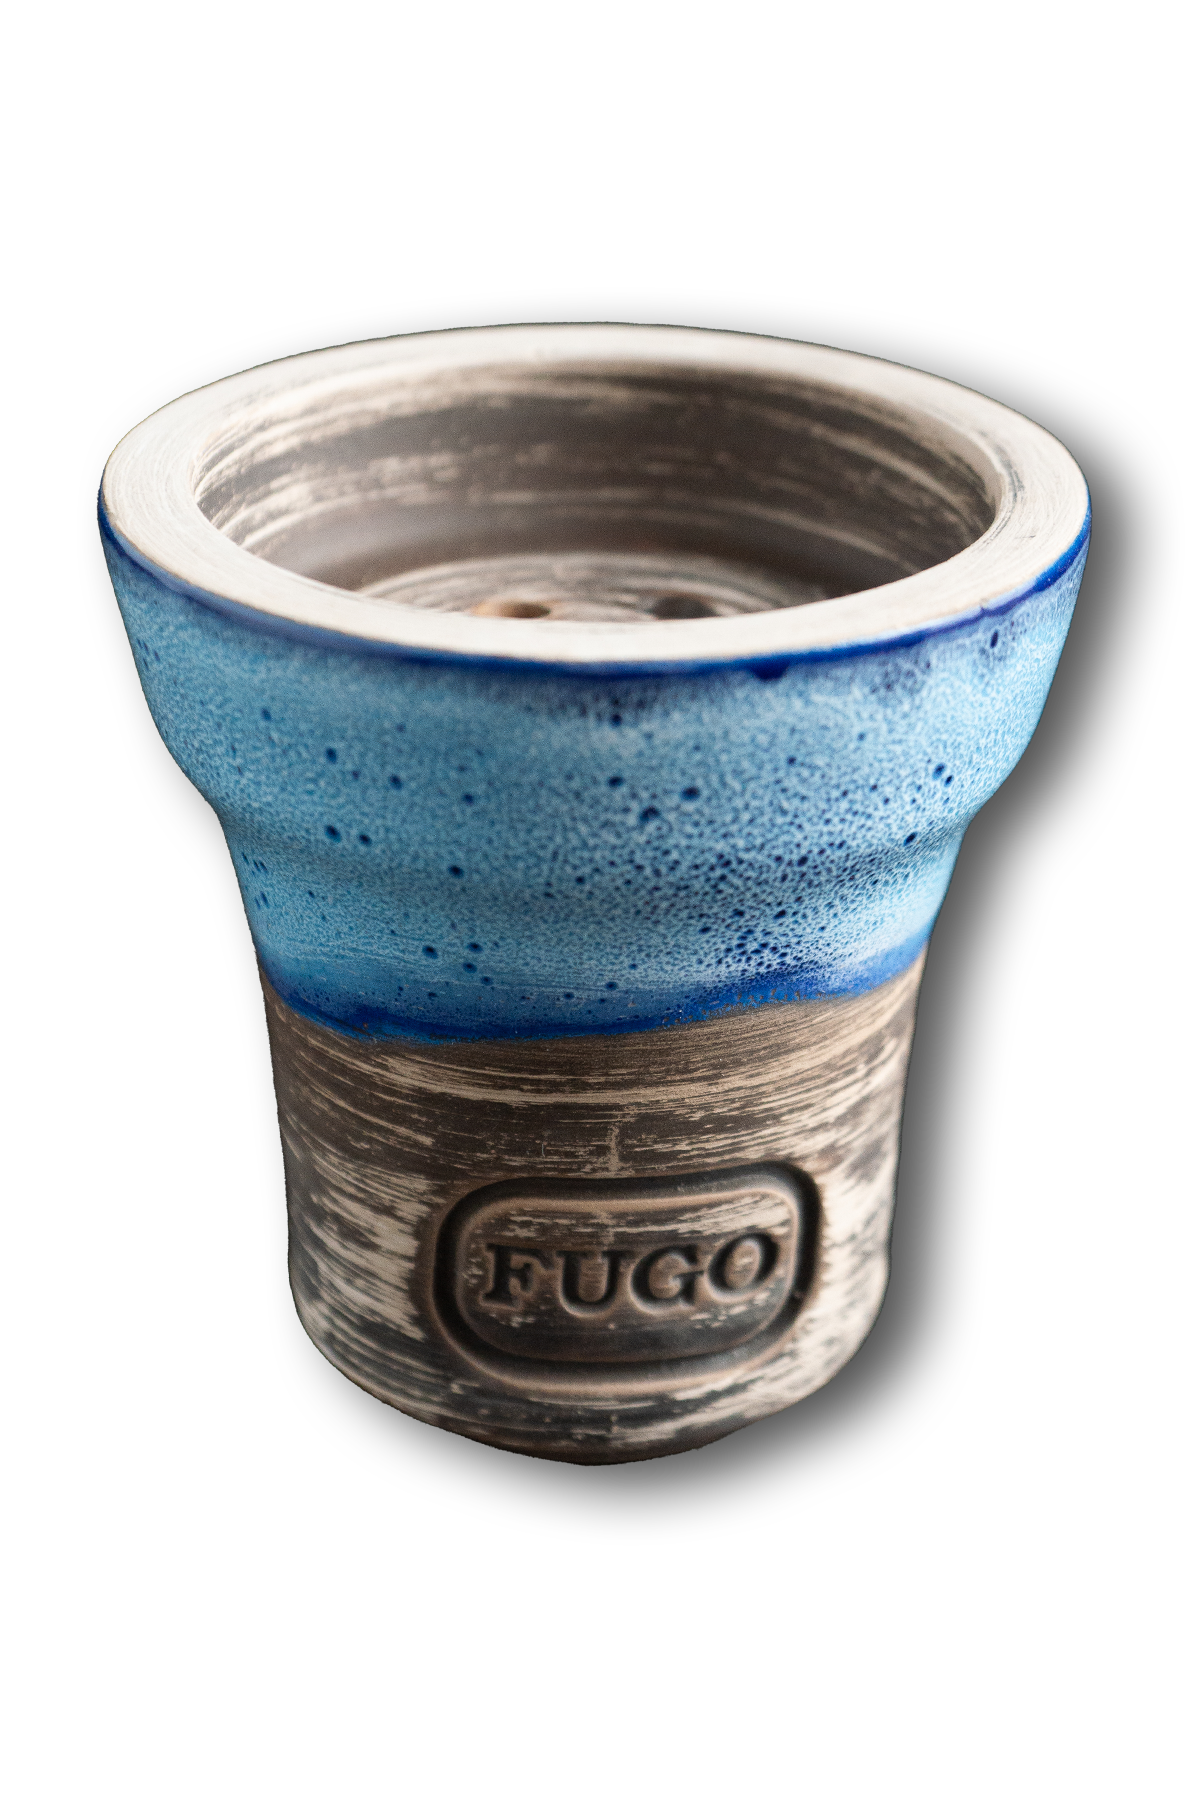 Bowl - FUGO Glazed Baikal